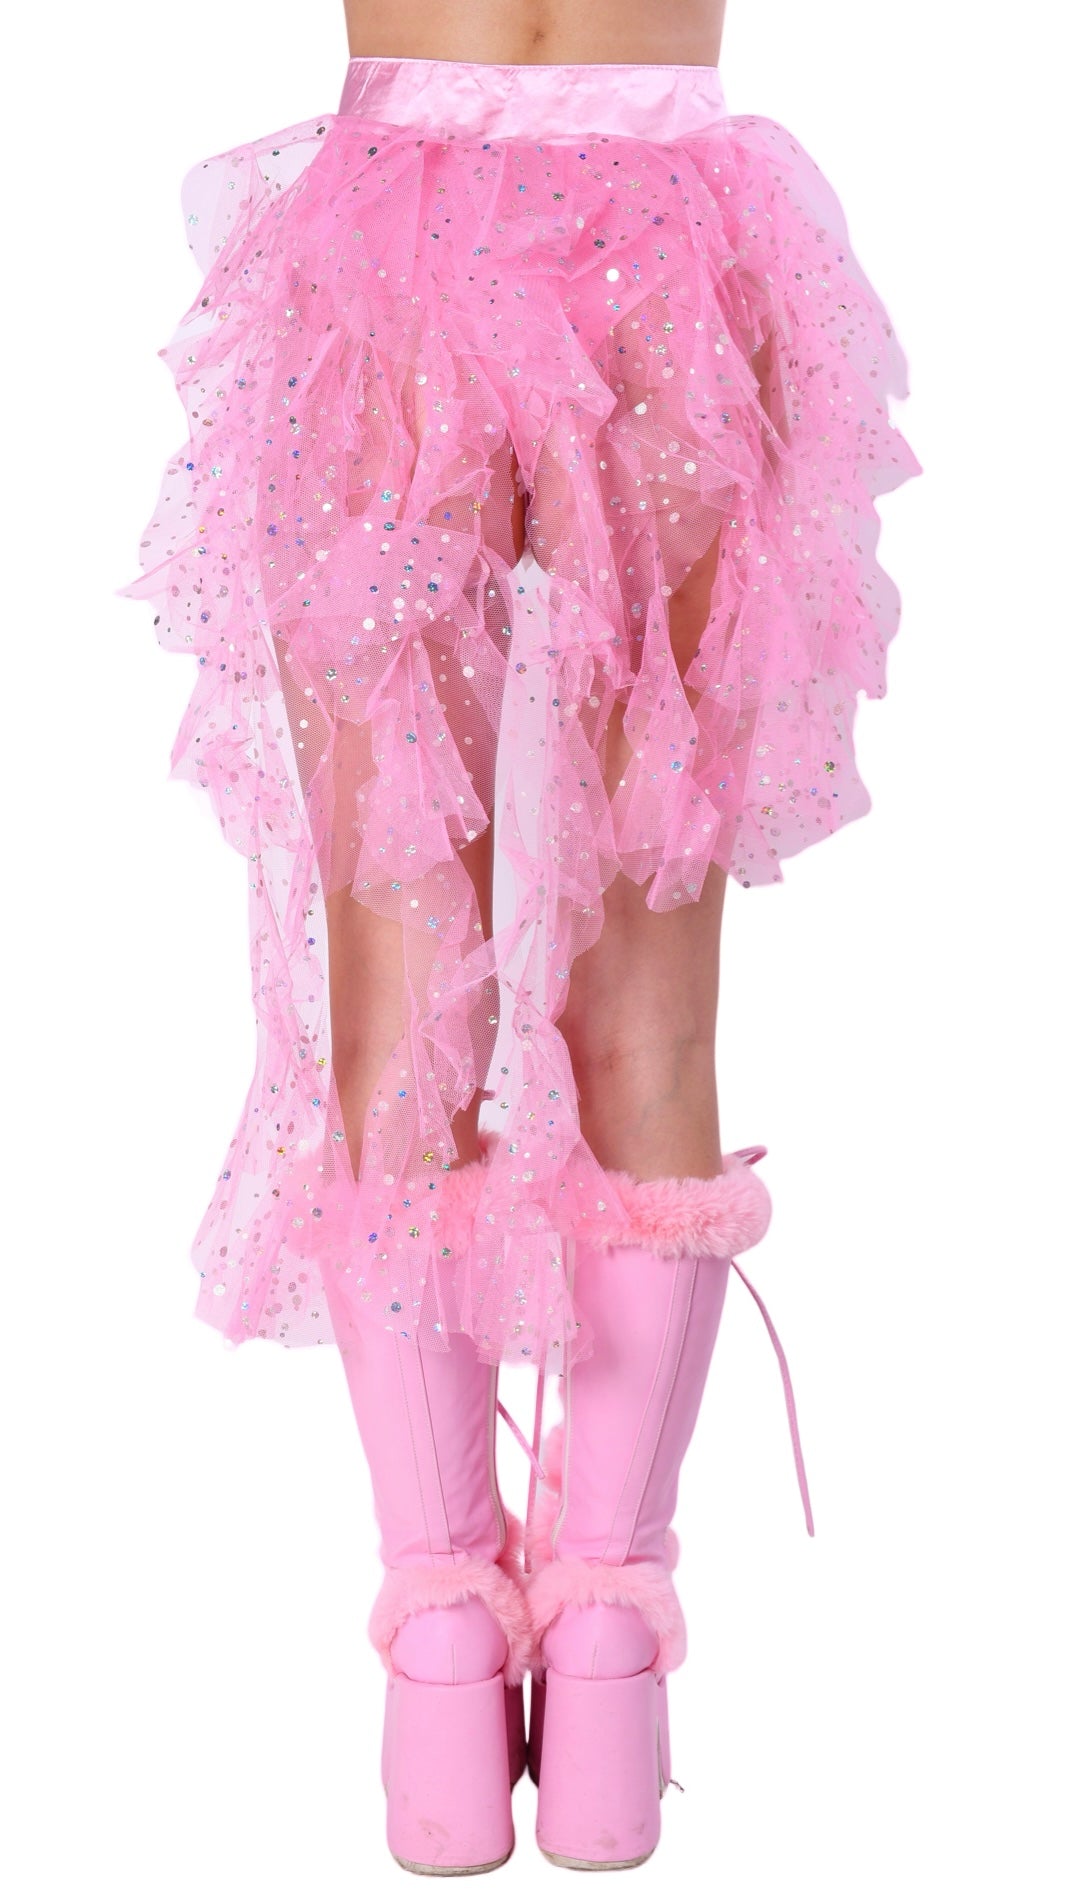 Barbie Doll Pink Long Skirt